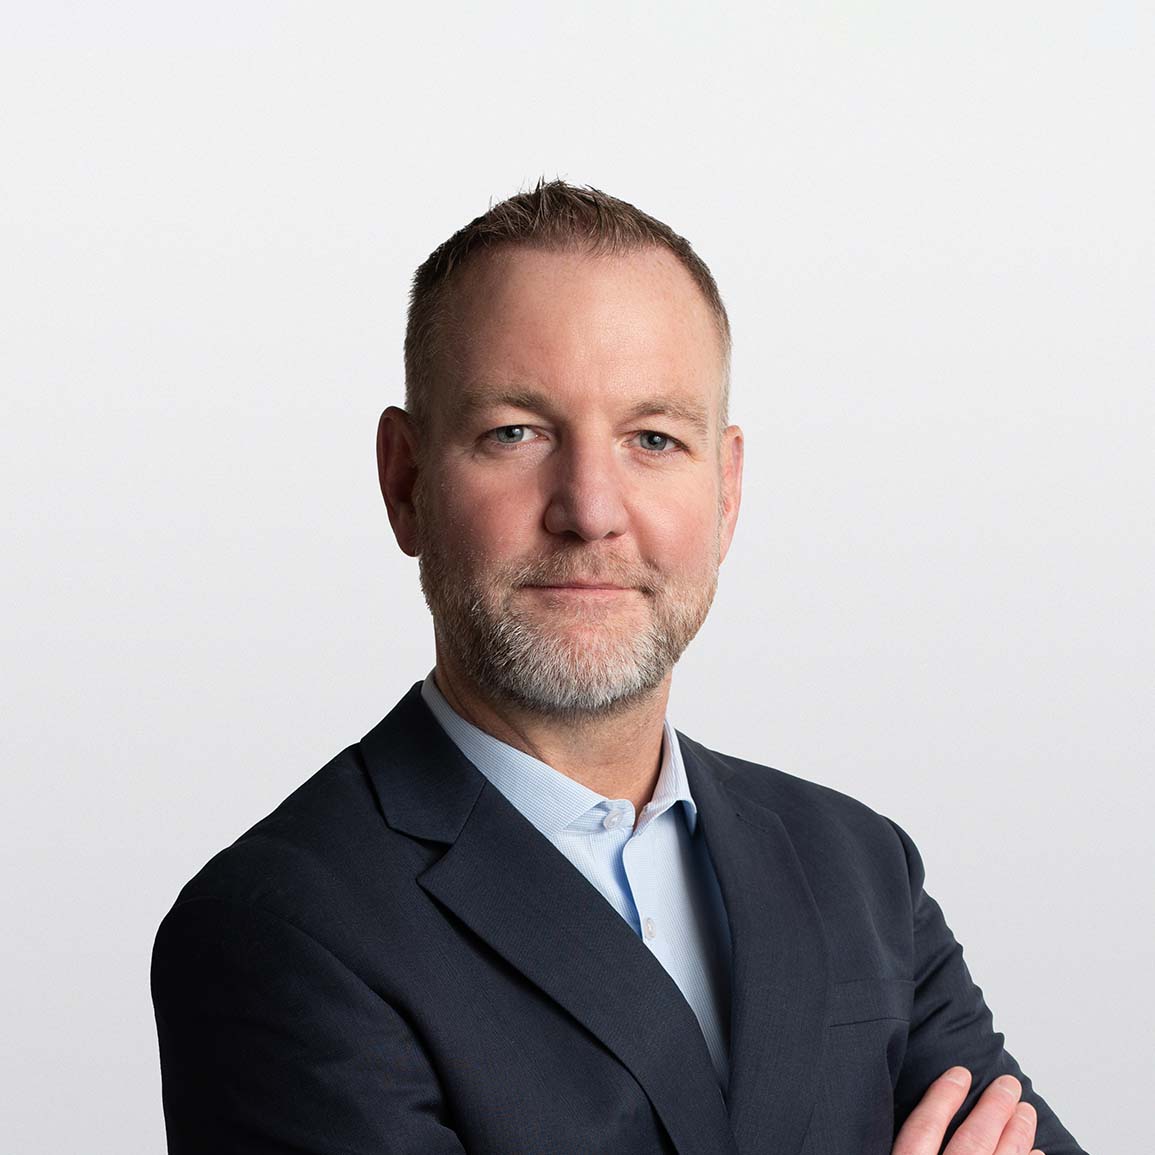 Image of James Cameron senior financial advisor on white background